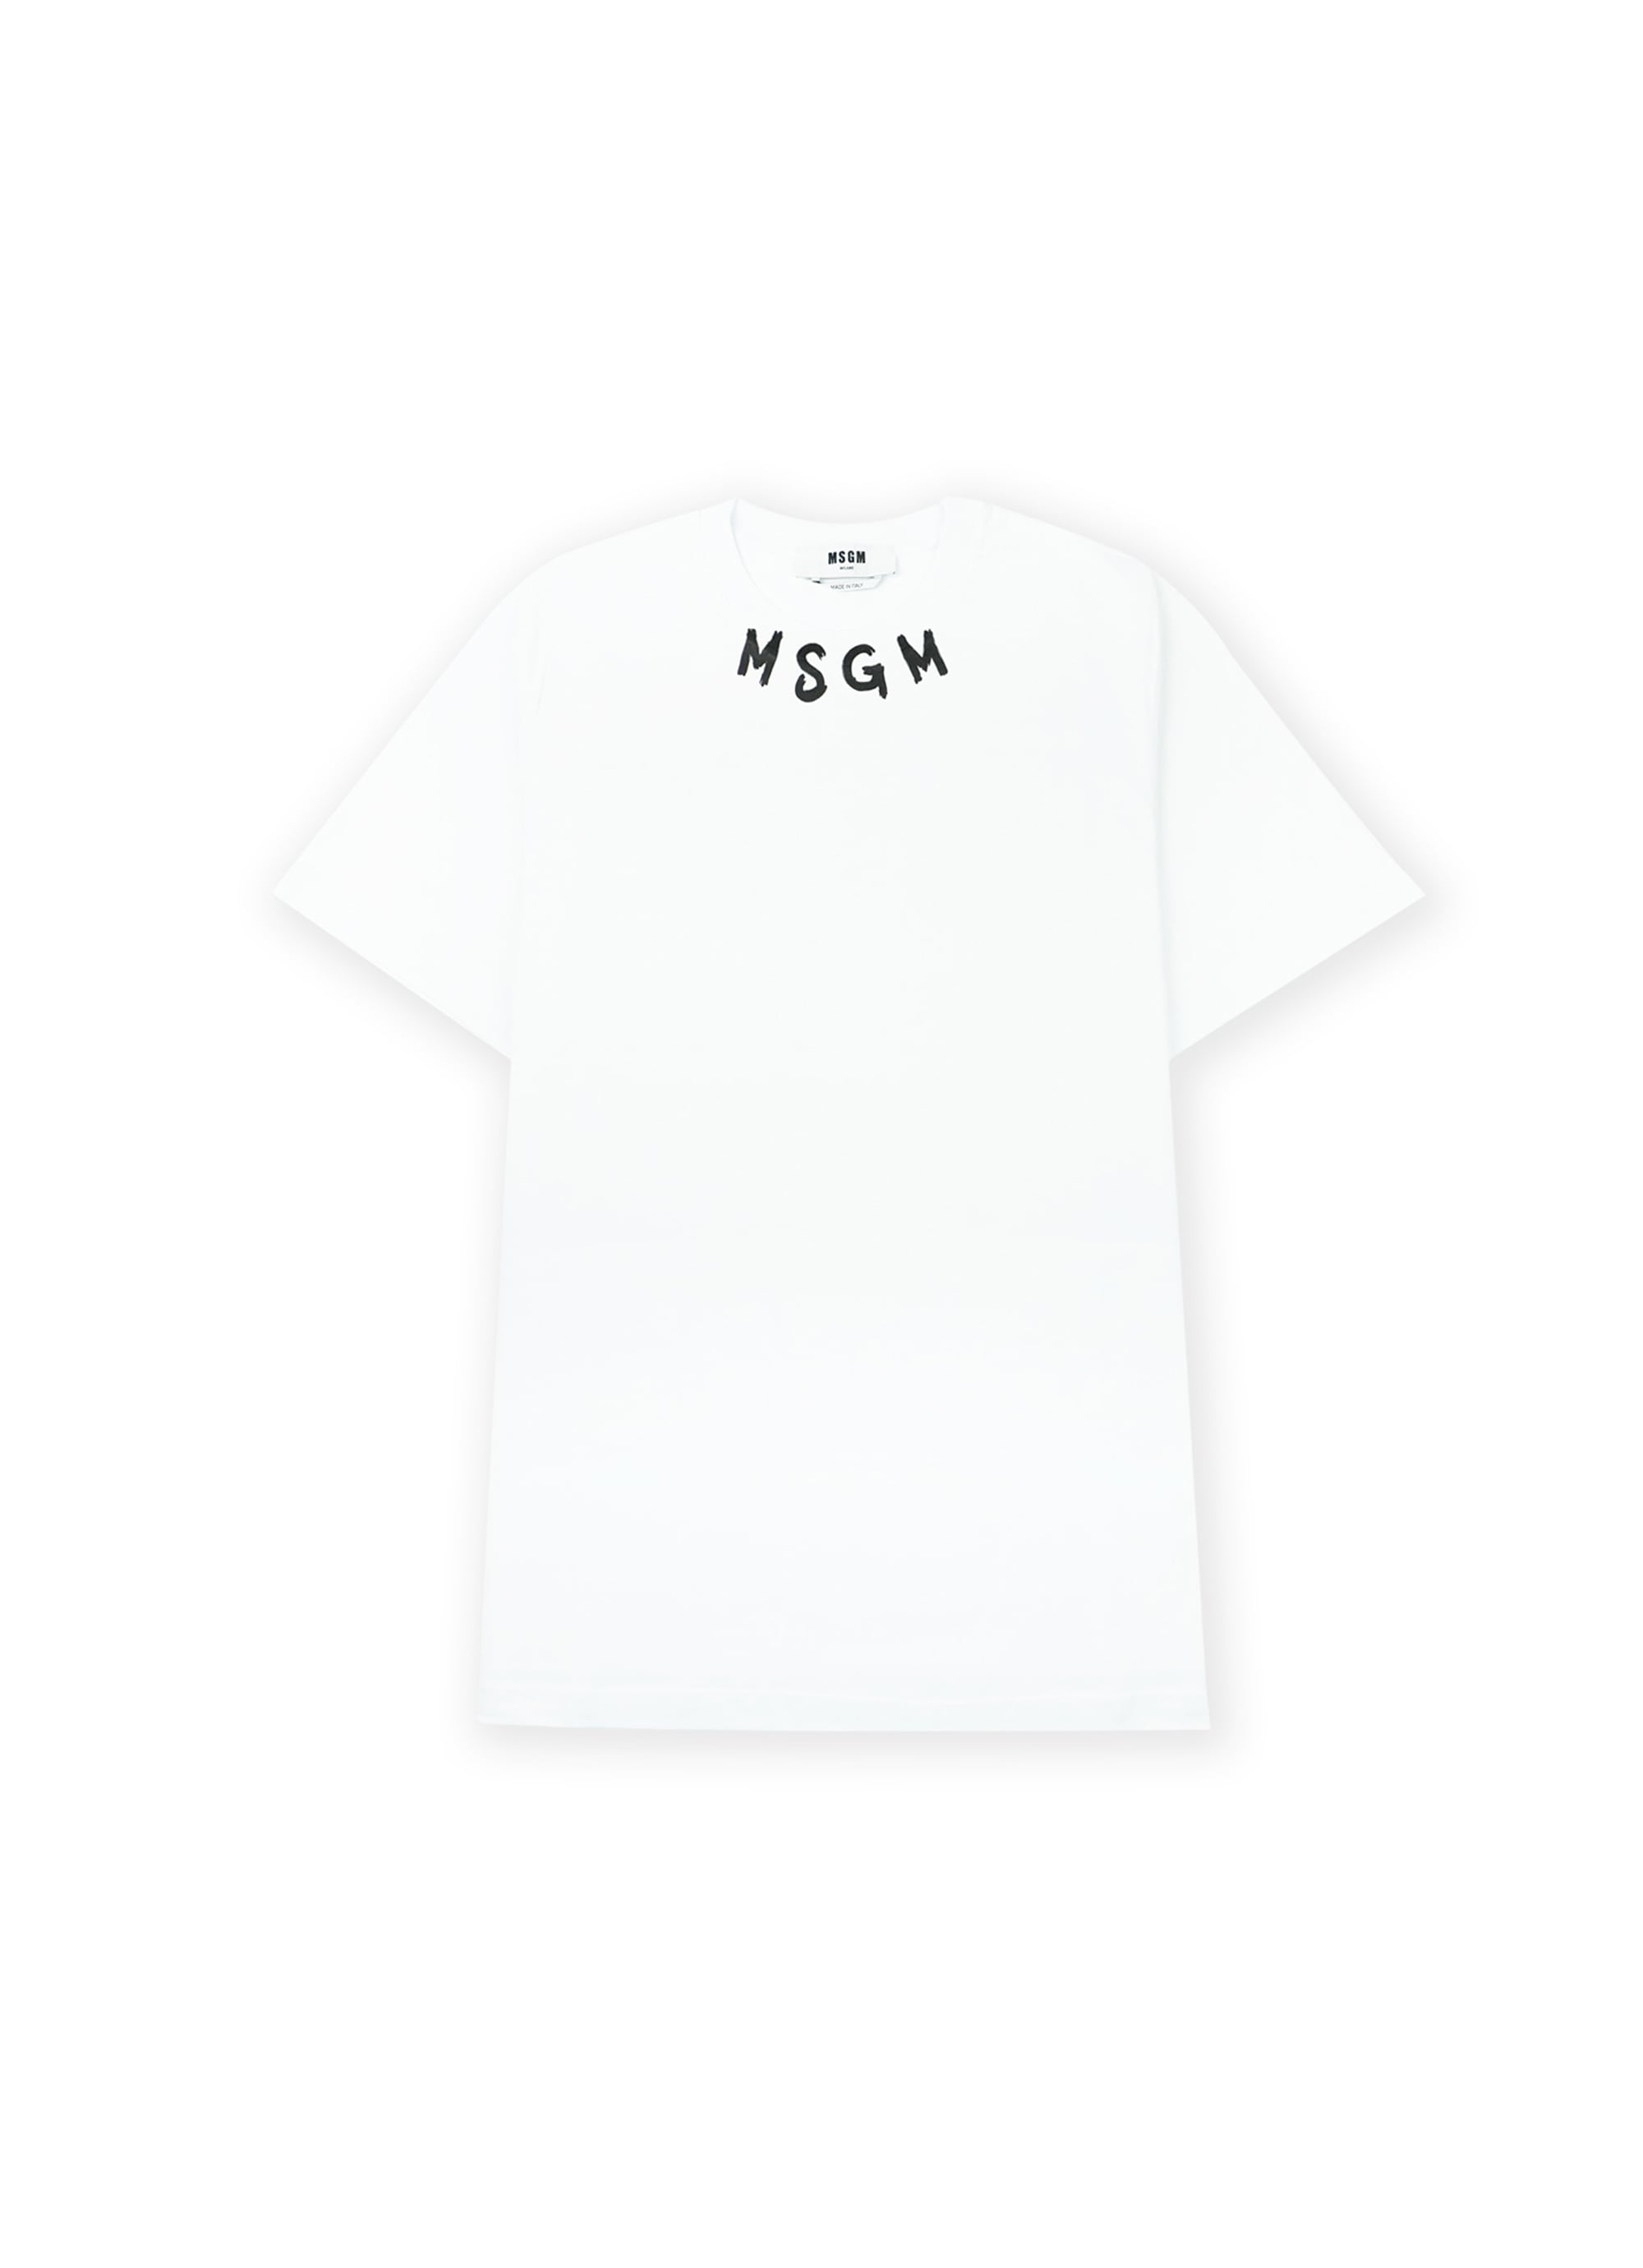 MSGM NEWブラッシュストロークロゴTシャツ 詳細画像 ホワイト 1